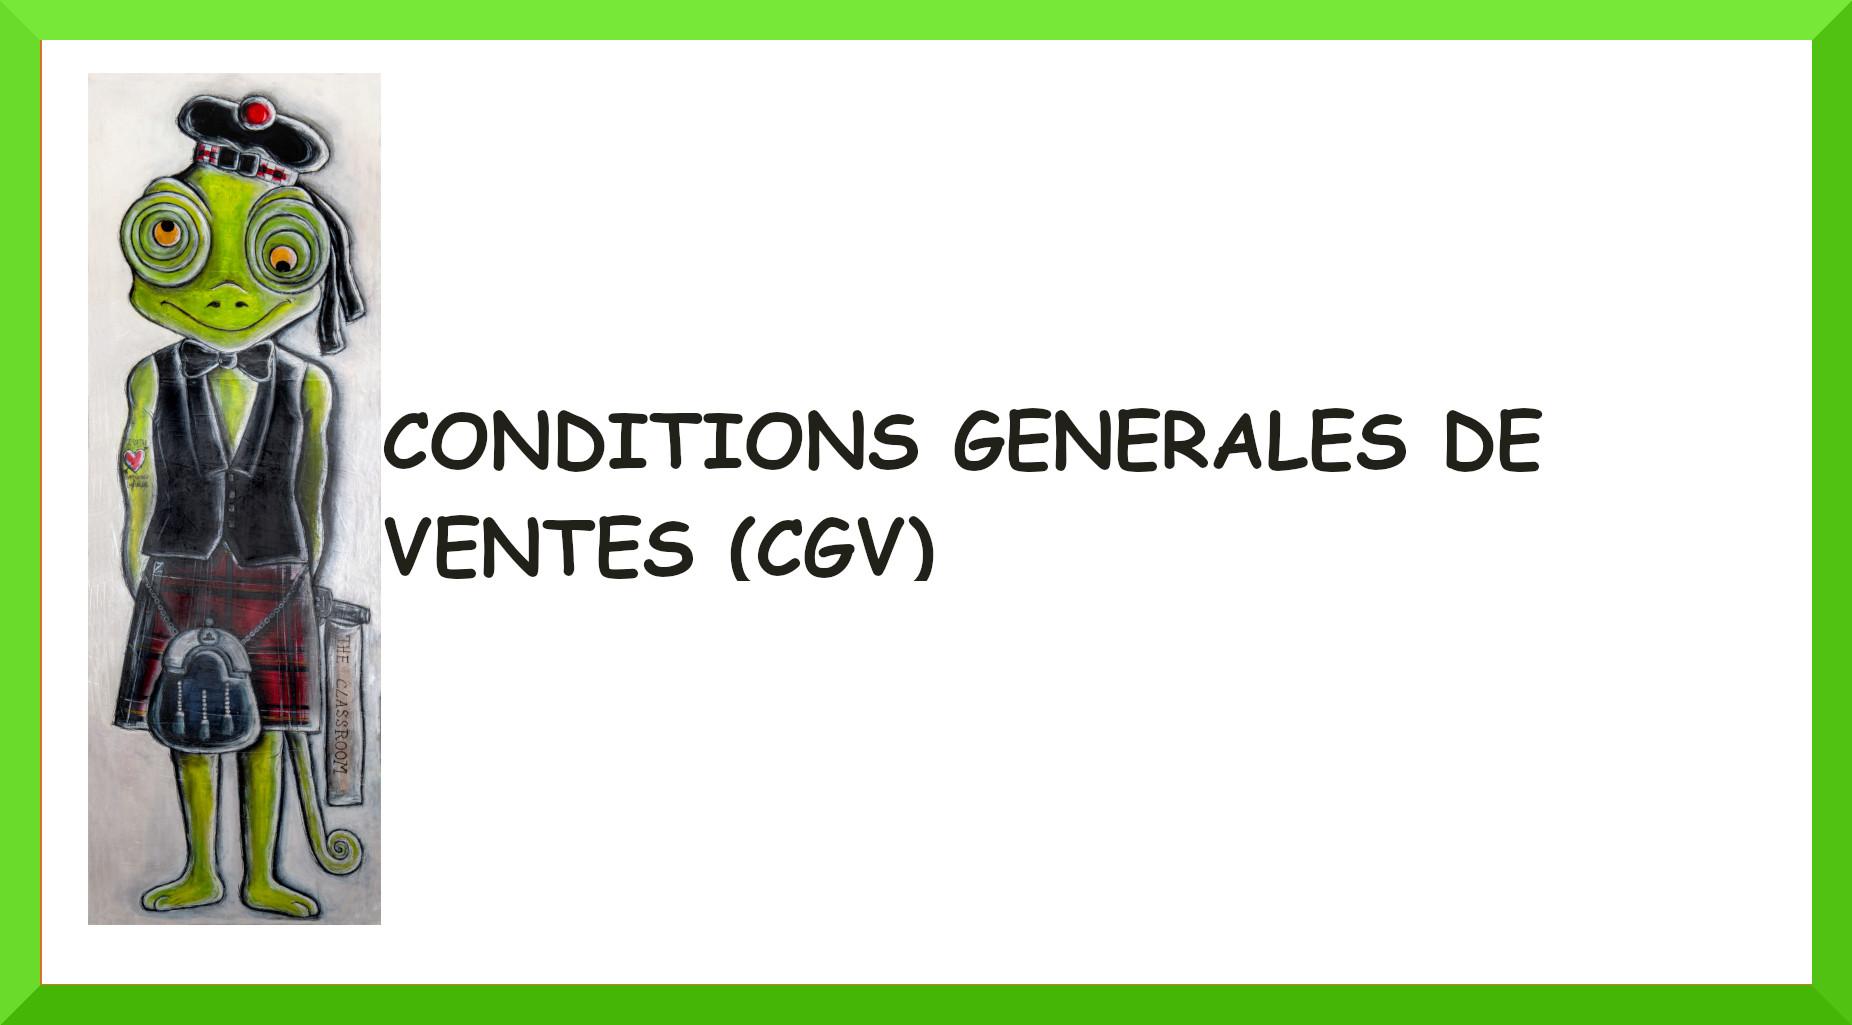 Conditions Générales de Vente (CGV)